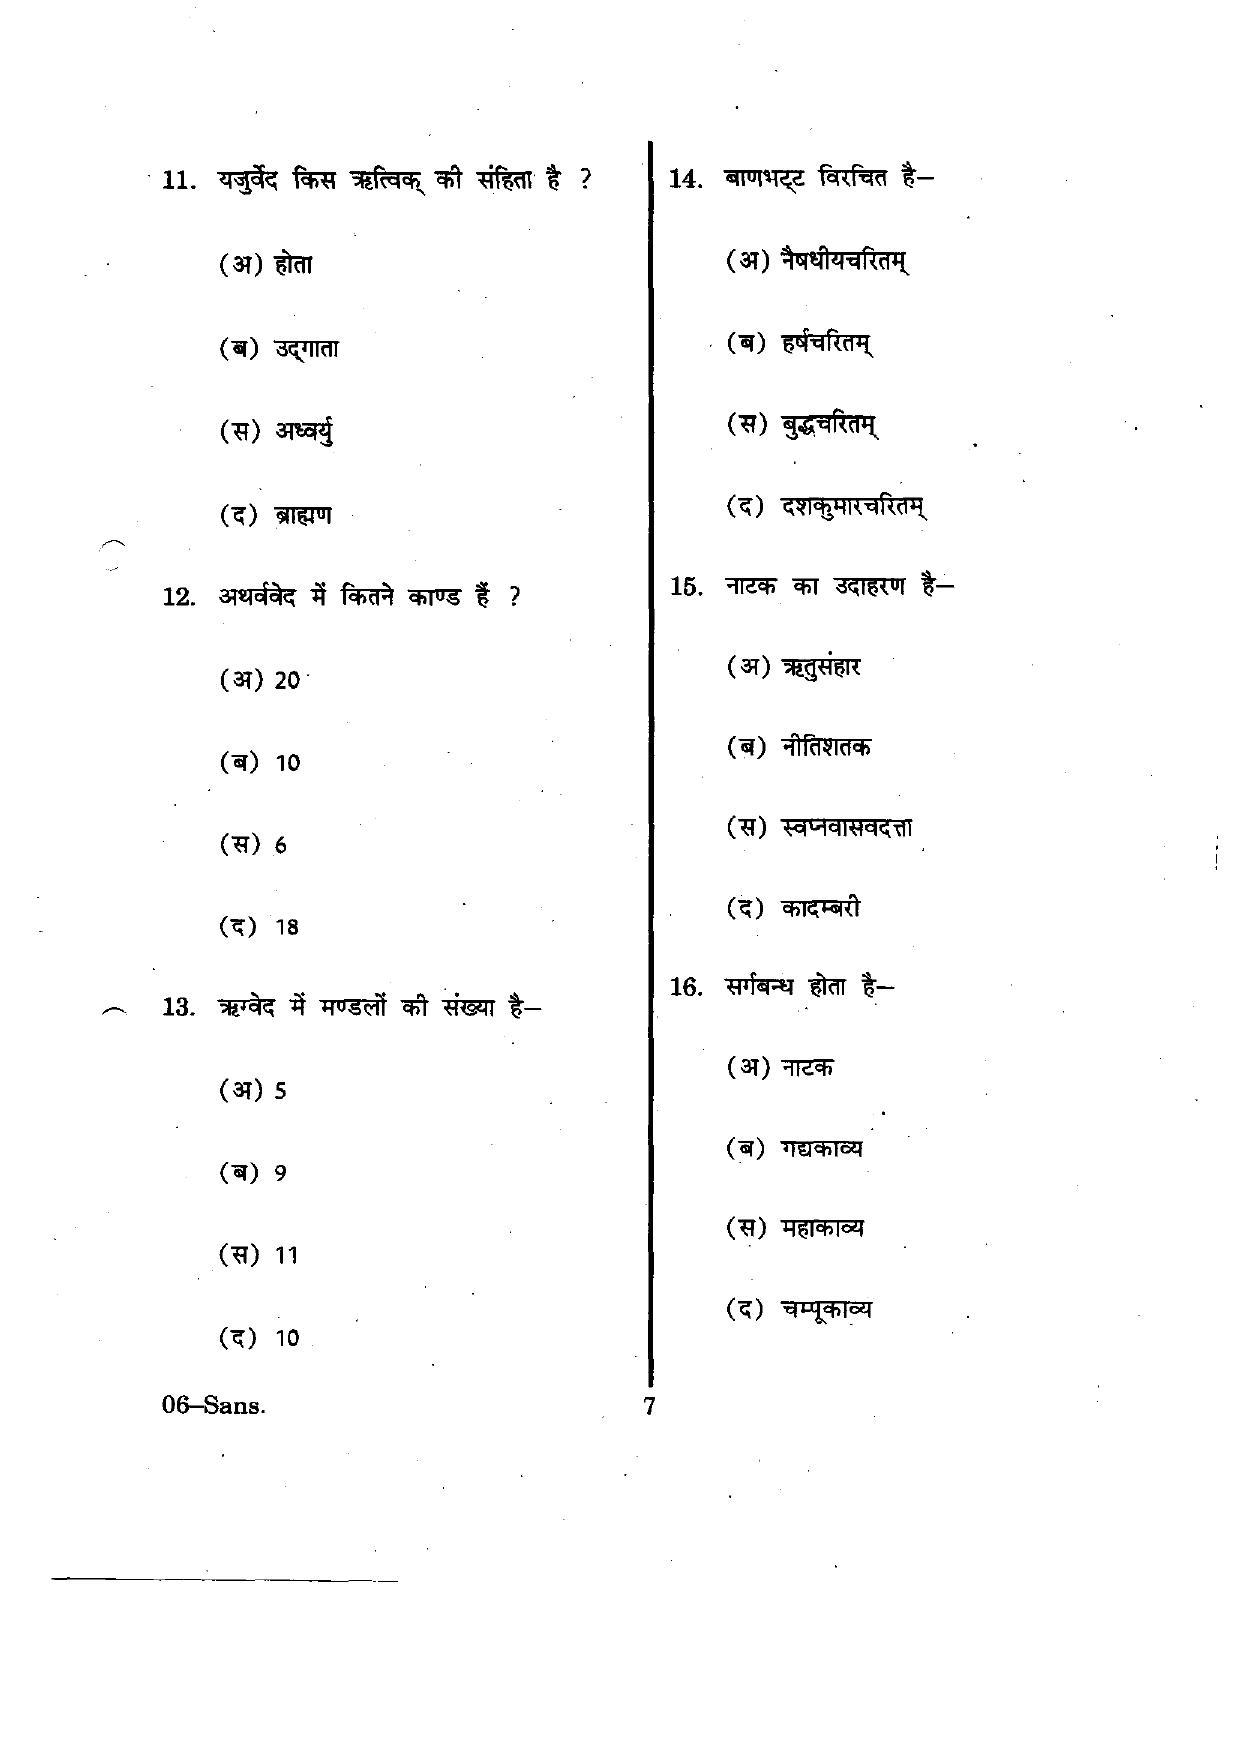 URATPG Sanskrit 2012 Question Paper - Page 7